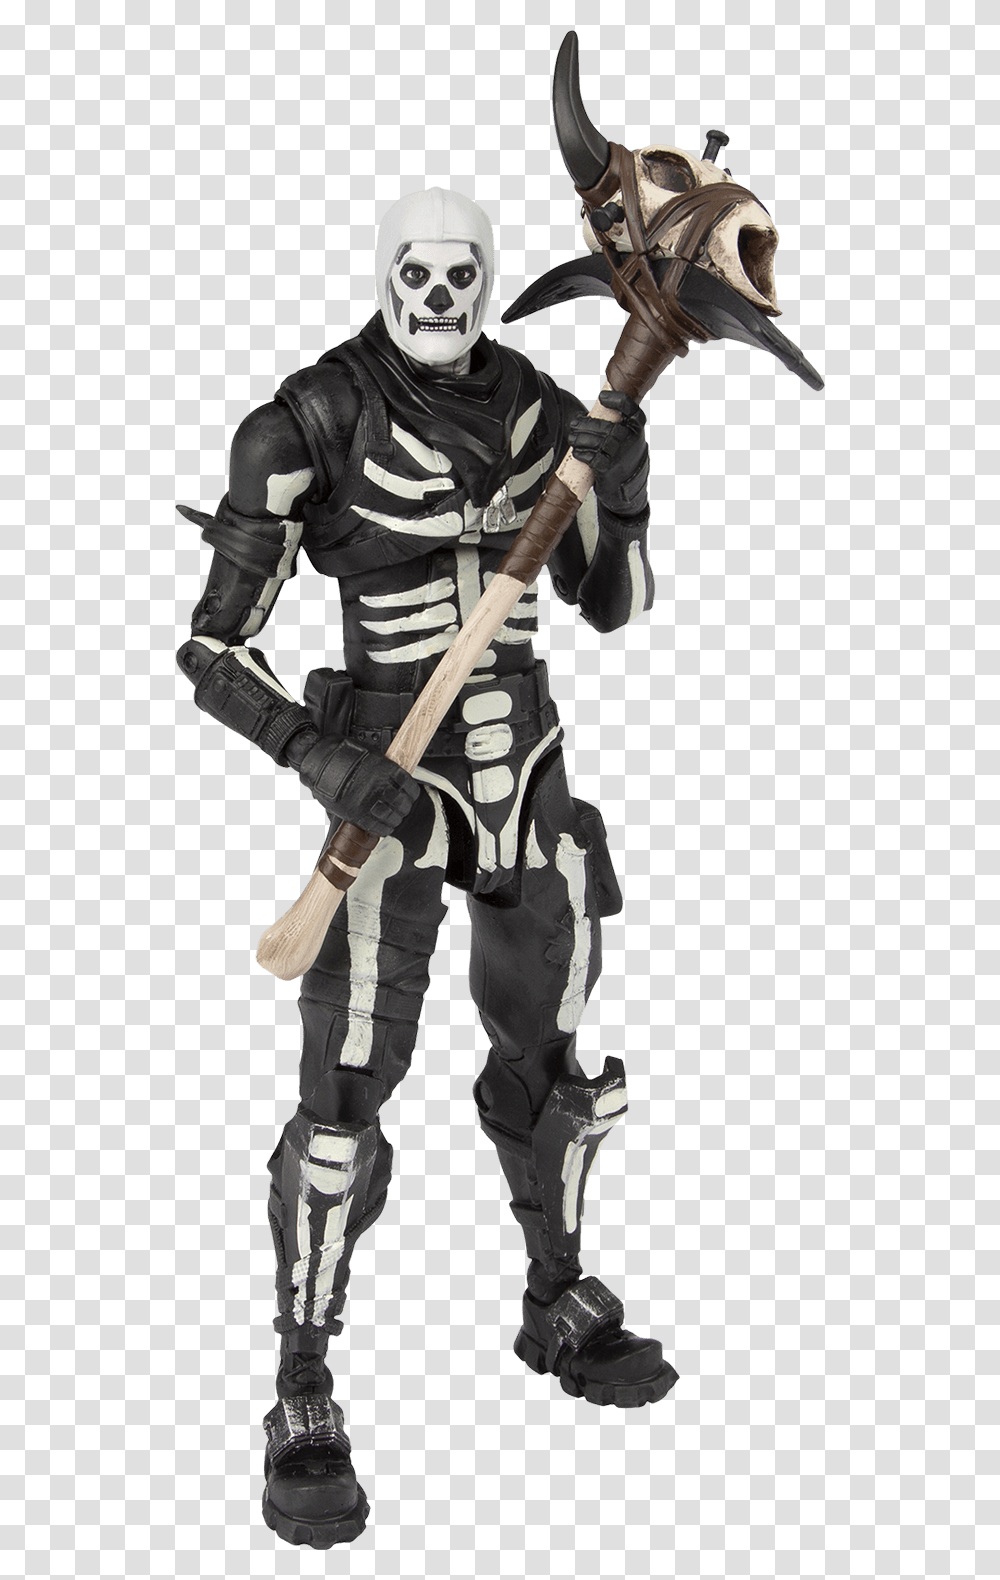 Fortnite Action Figure Fortnite Skull Trooper Toy, Person, Human, Ninja, Samurai Transparent Png